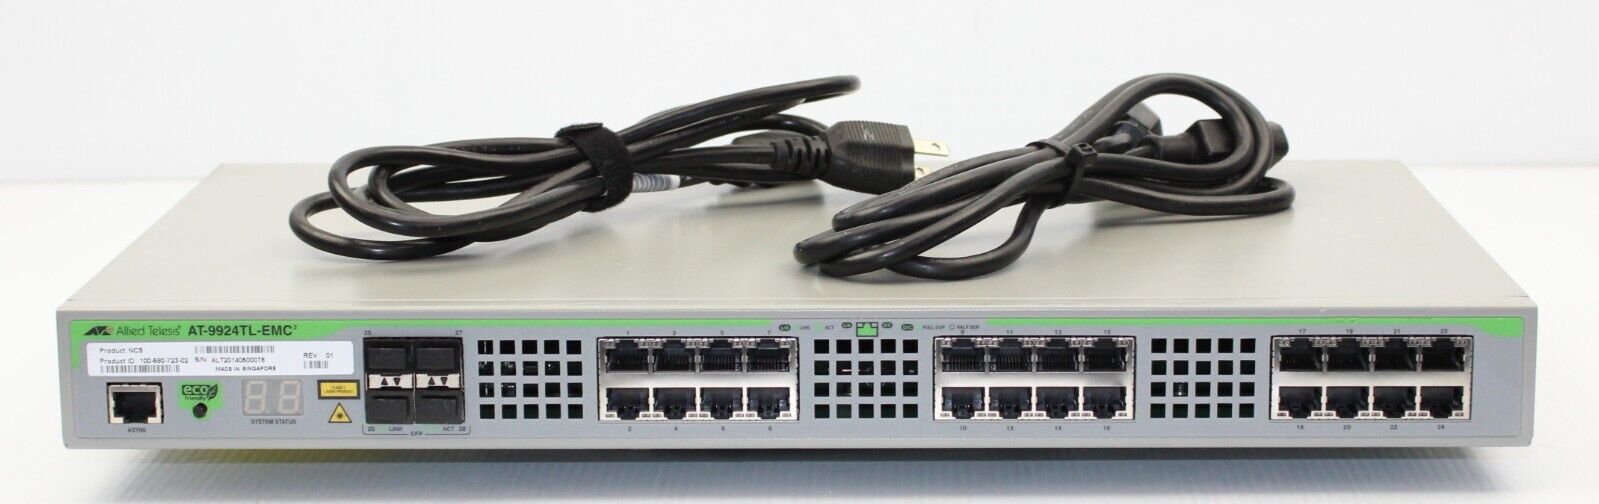 Allied Telesis | AT-9924TL-EMC2 | 24 Port Gigabit Network Switch-Dual PSU-NoEARS